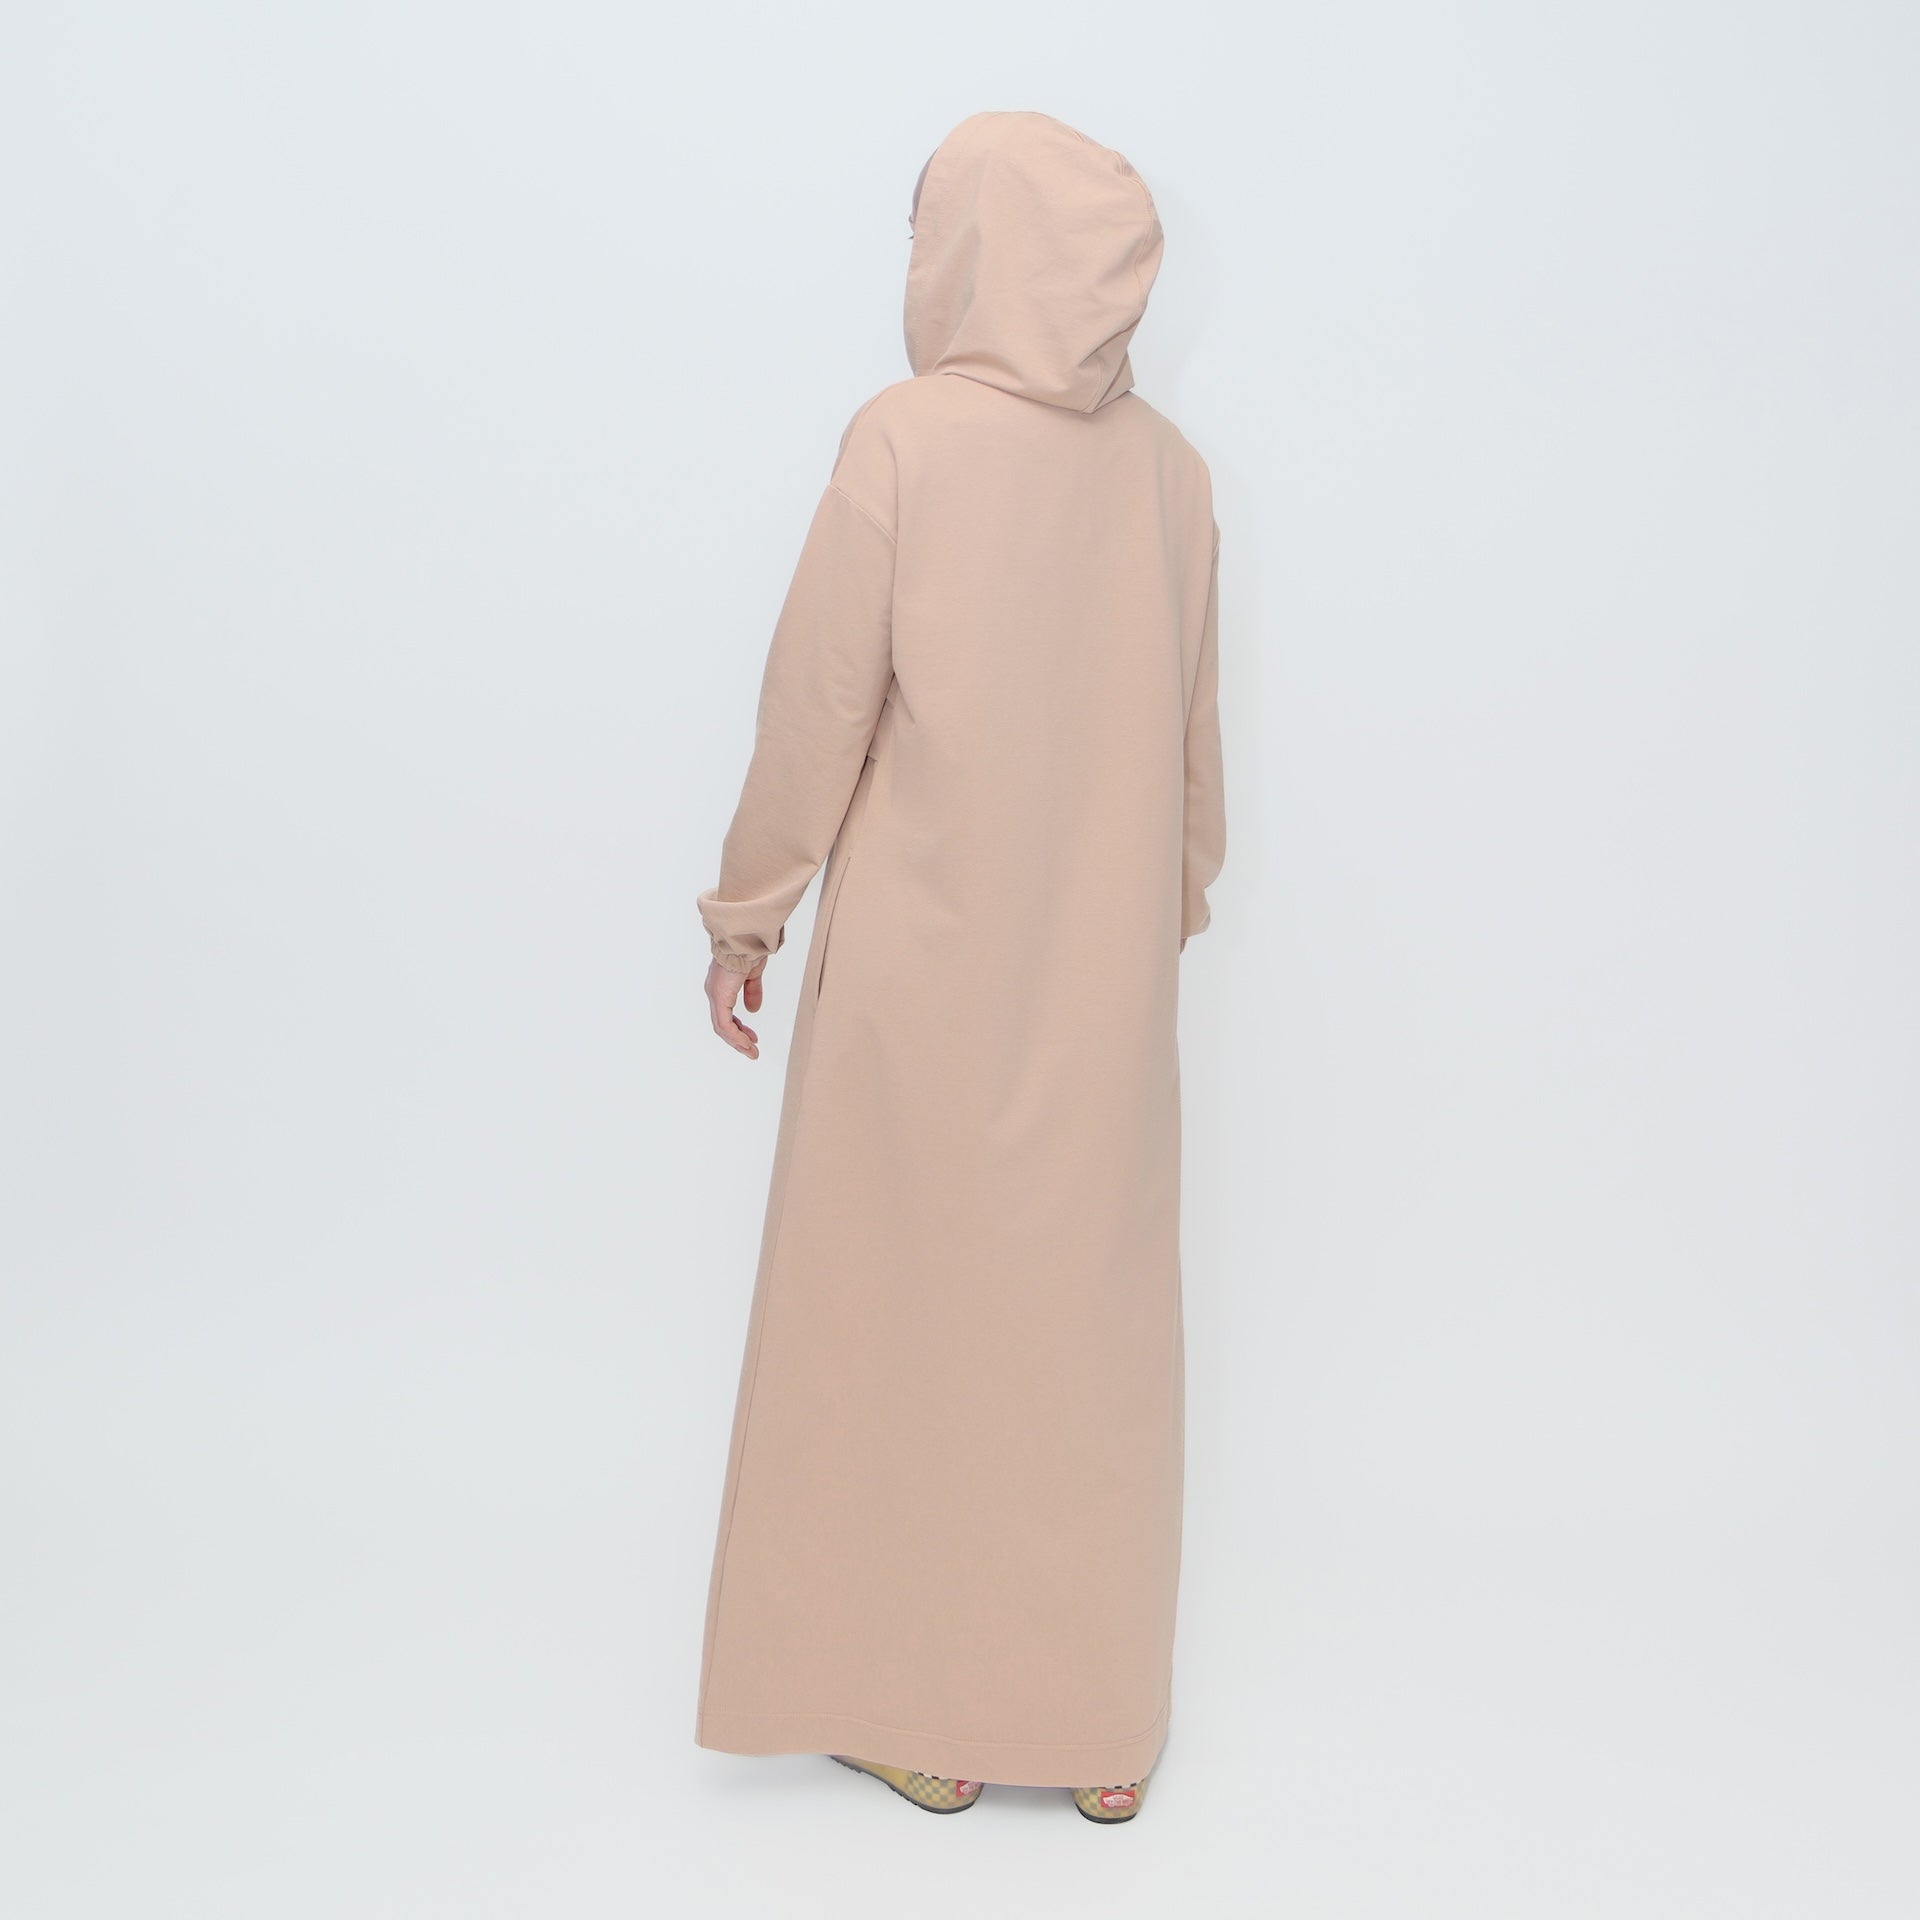 Muslim dress for women "NUR" abaya dress style 2